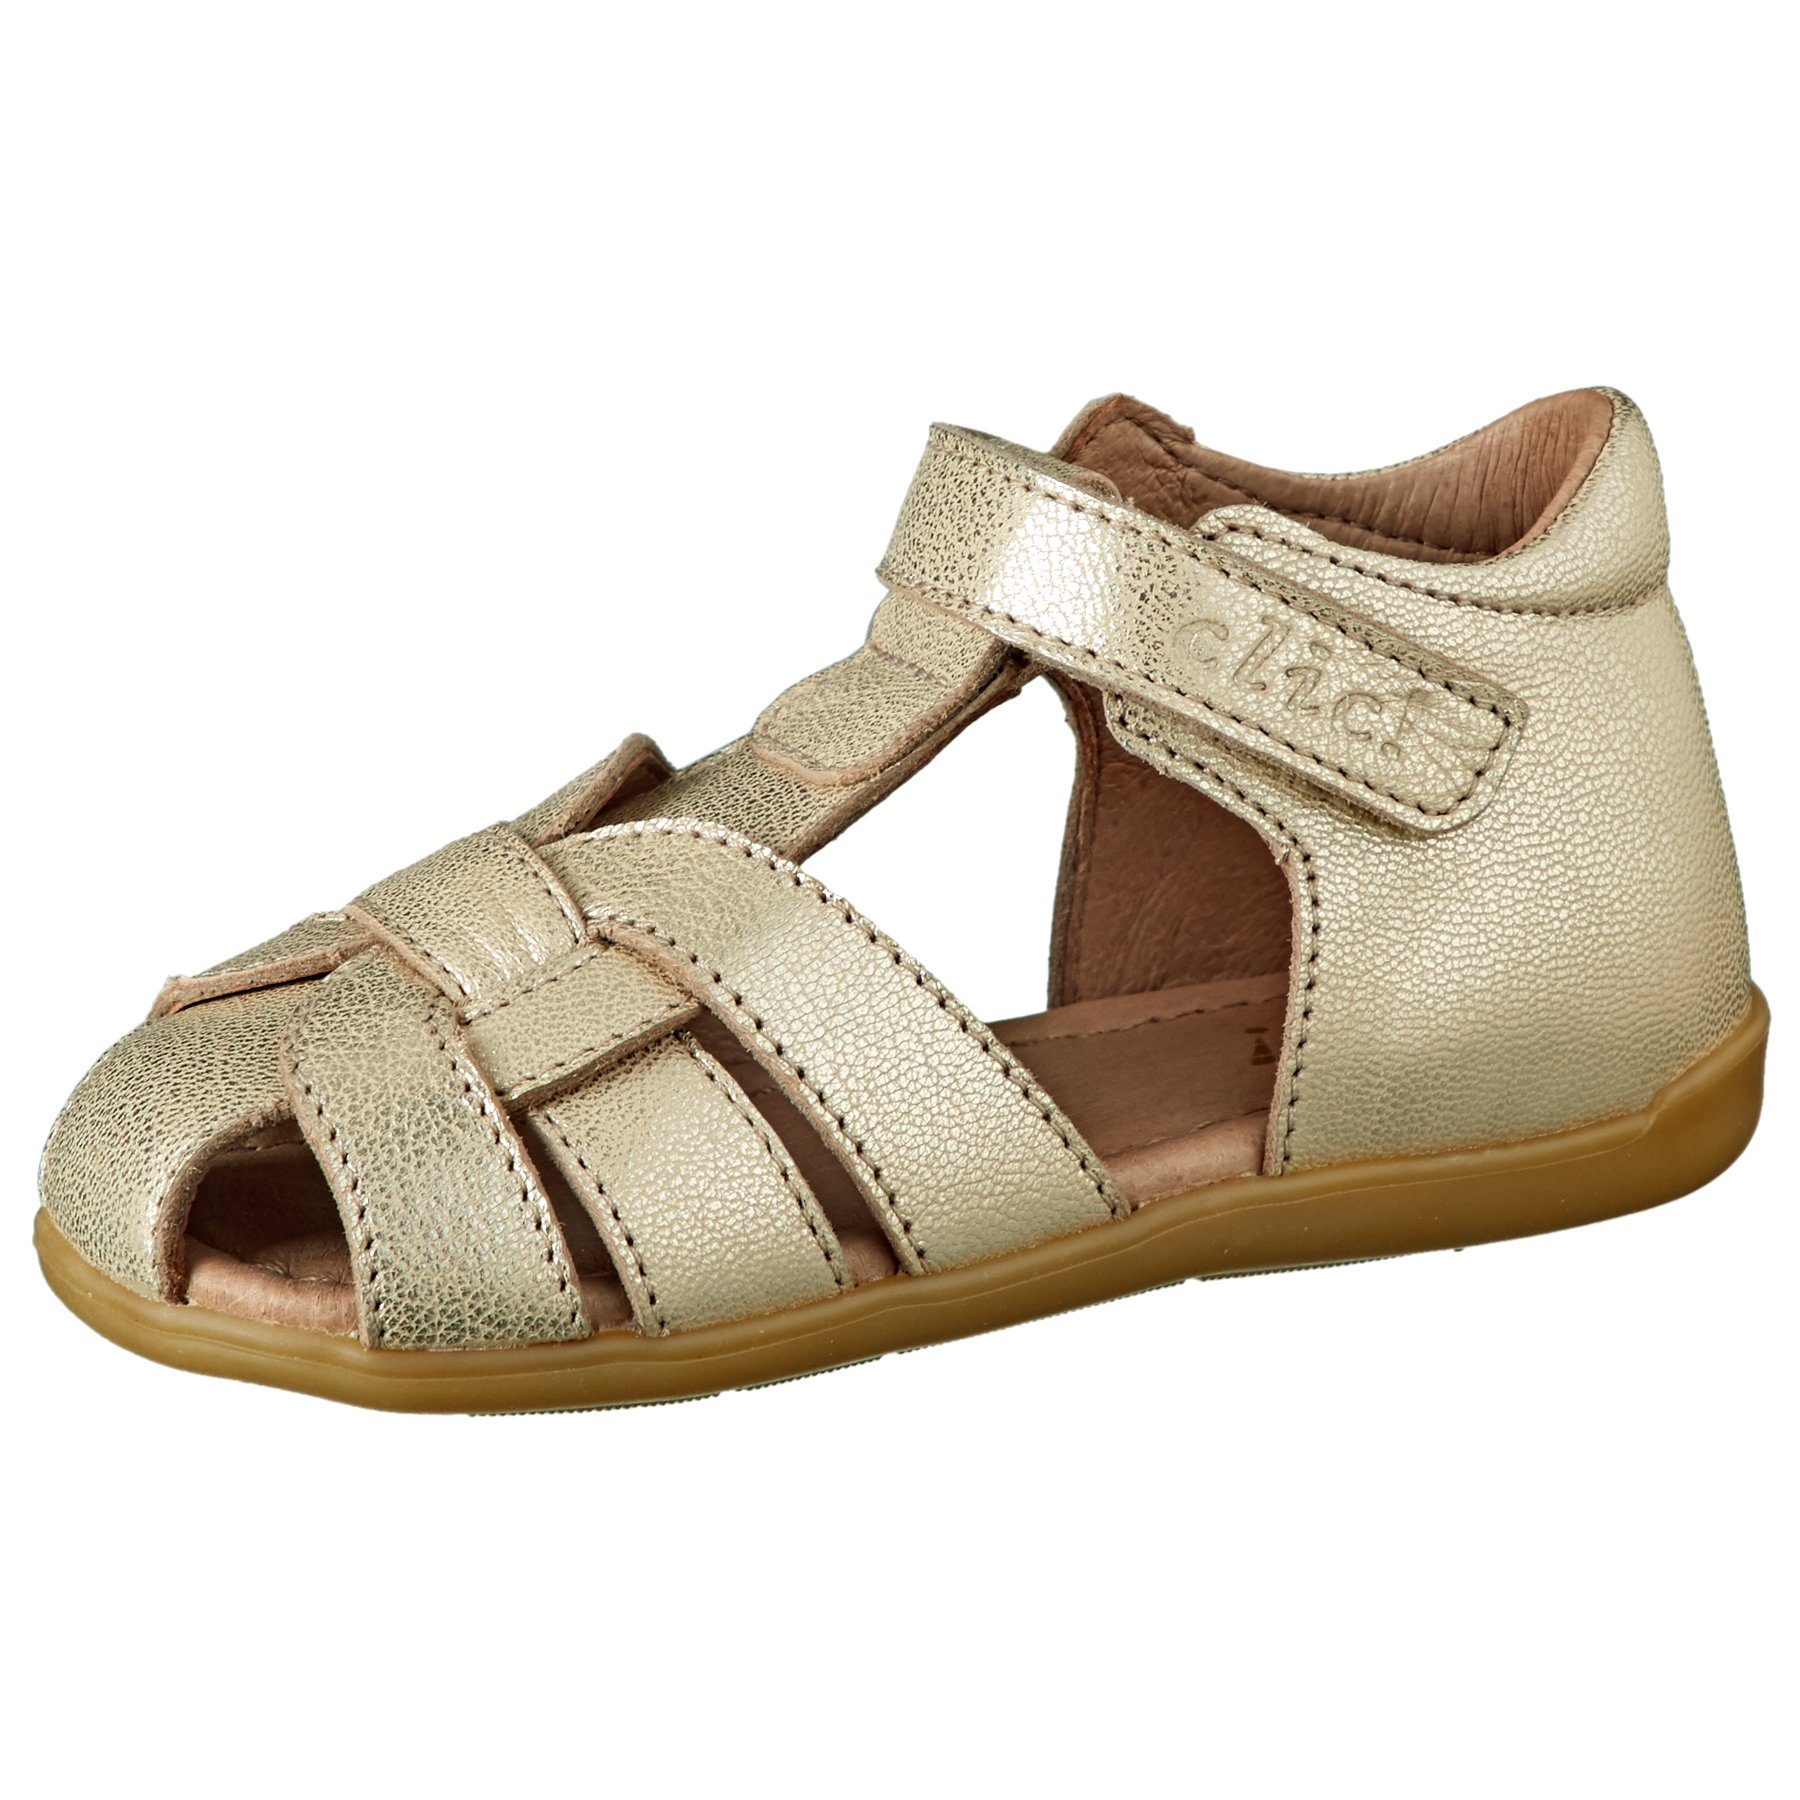 Clic »Clic Sandalen Mädchen Lauflernschuhe Leder Gold 20313« Sandalette  online kaufen | OTTO